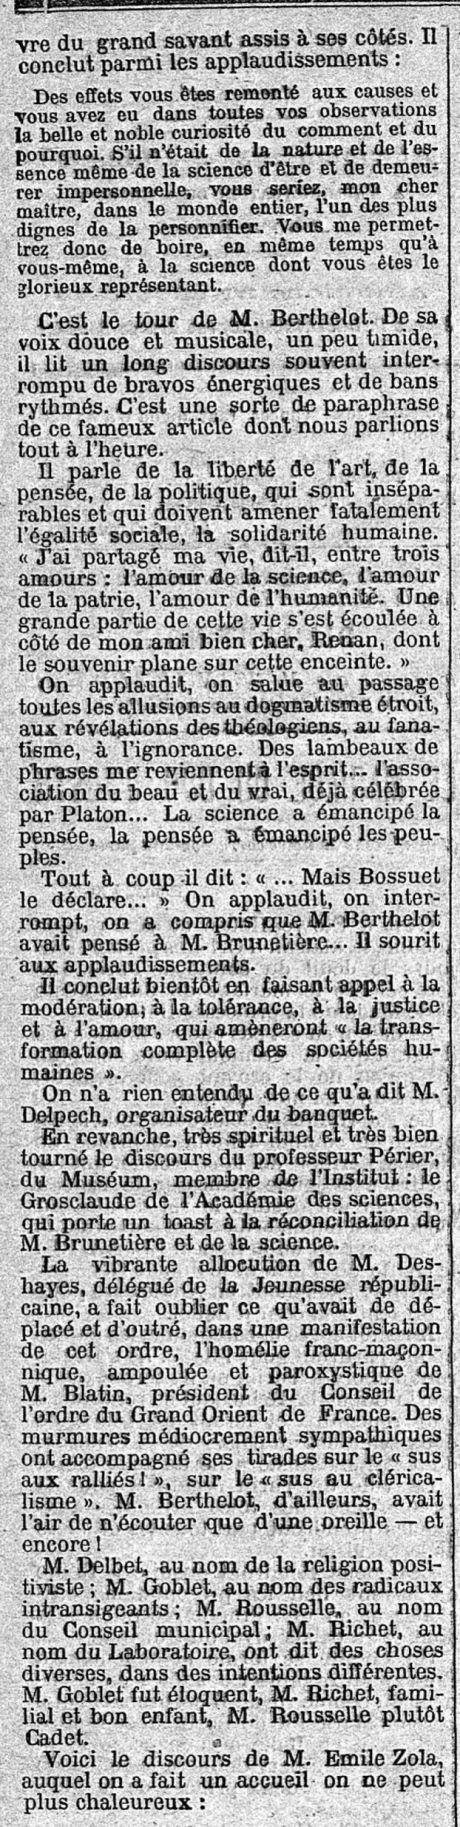 Le Figaro du 05-04-1895 Source Gallica.bnf.fr